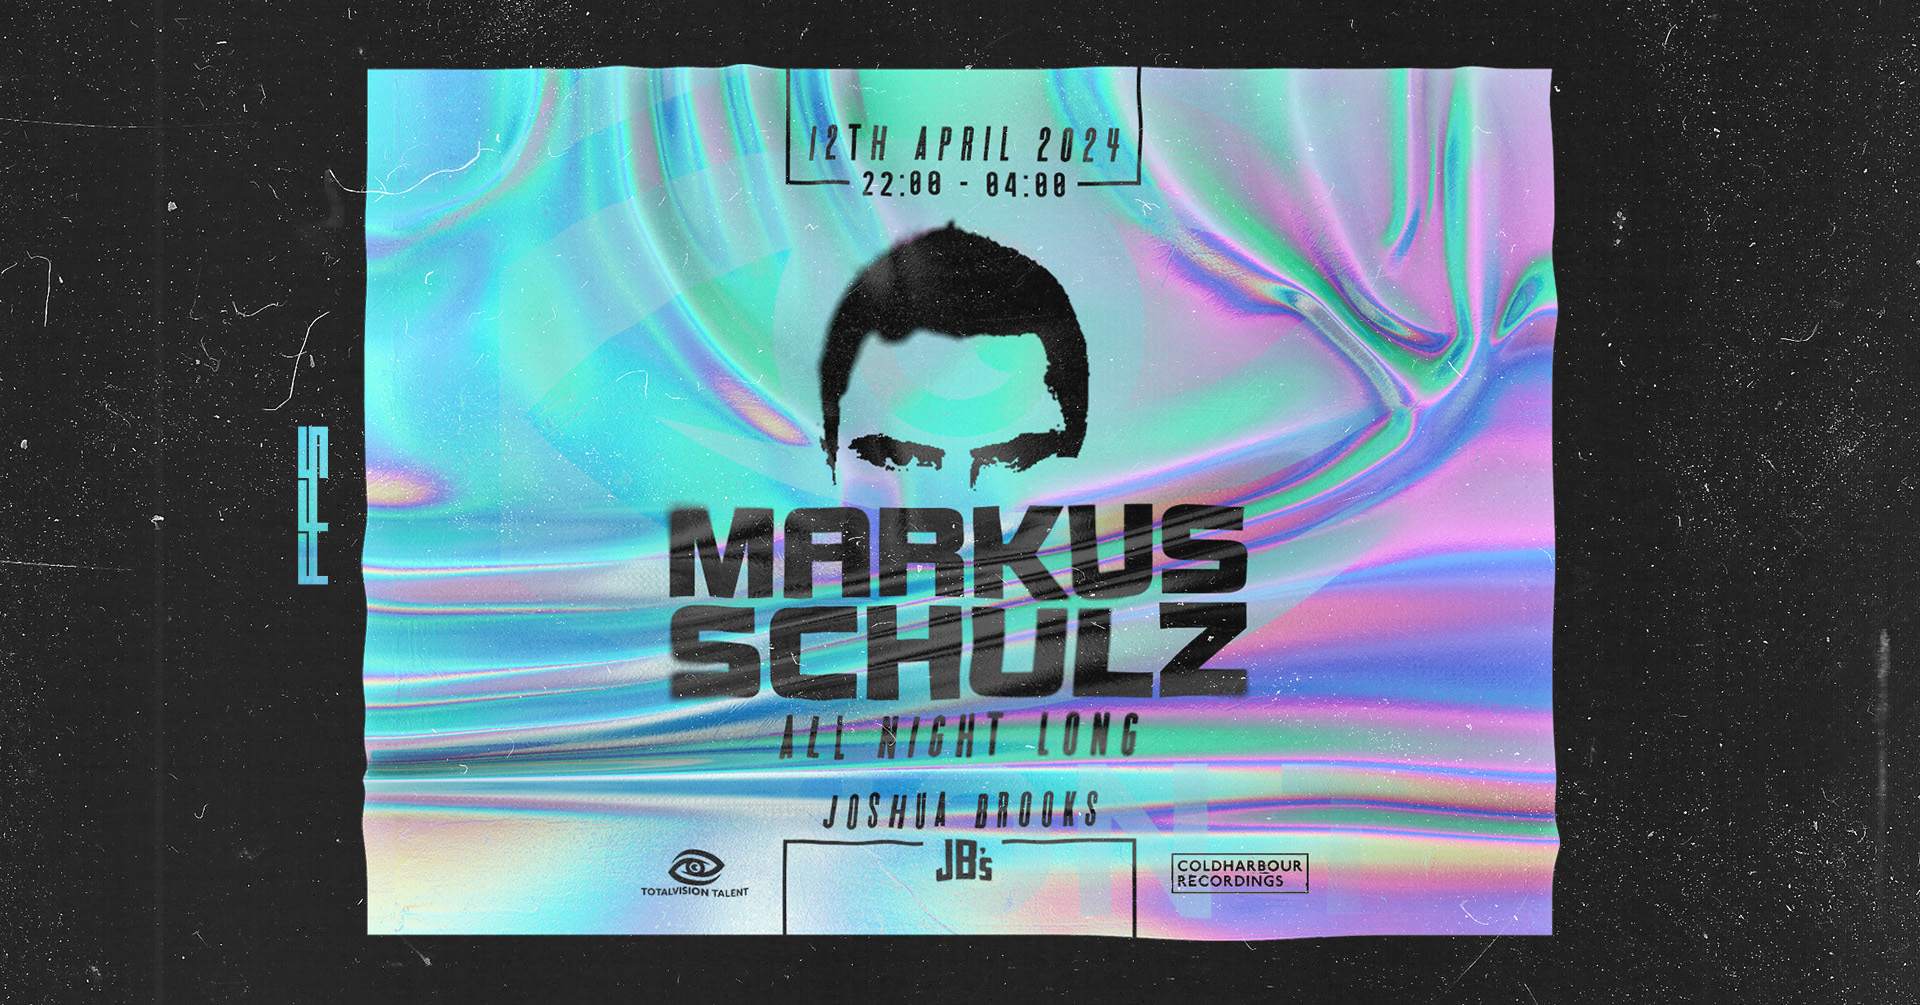 Markus Schulz: All Night Long - フライヤー表